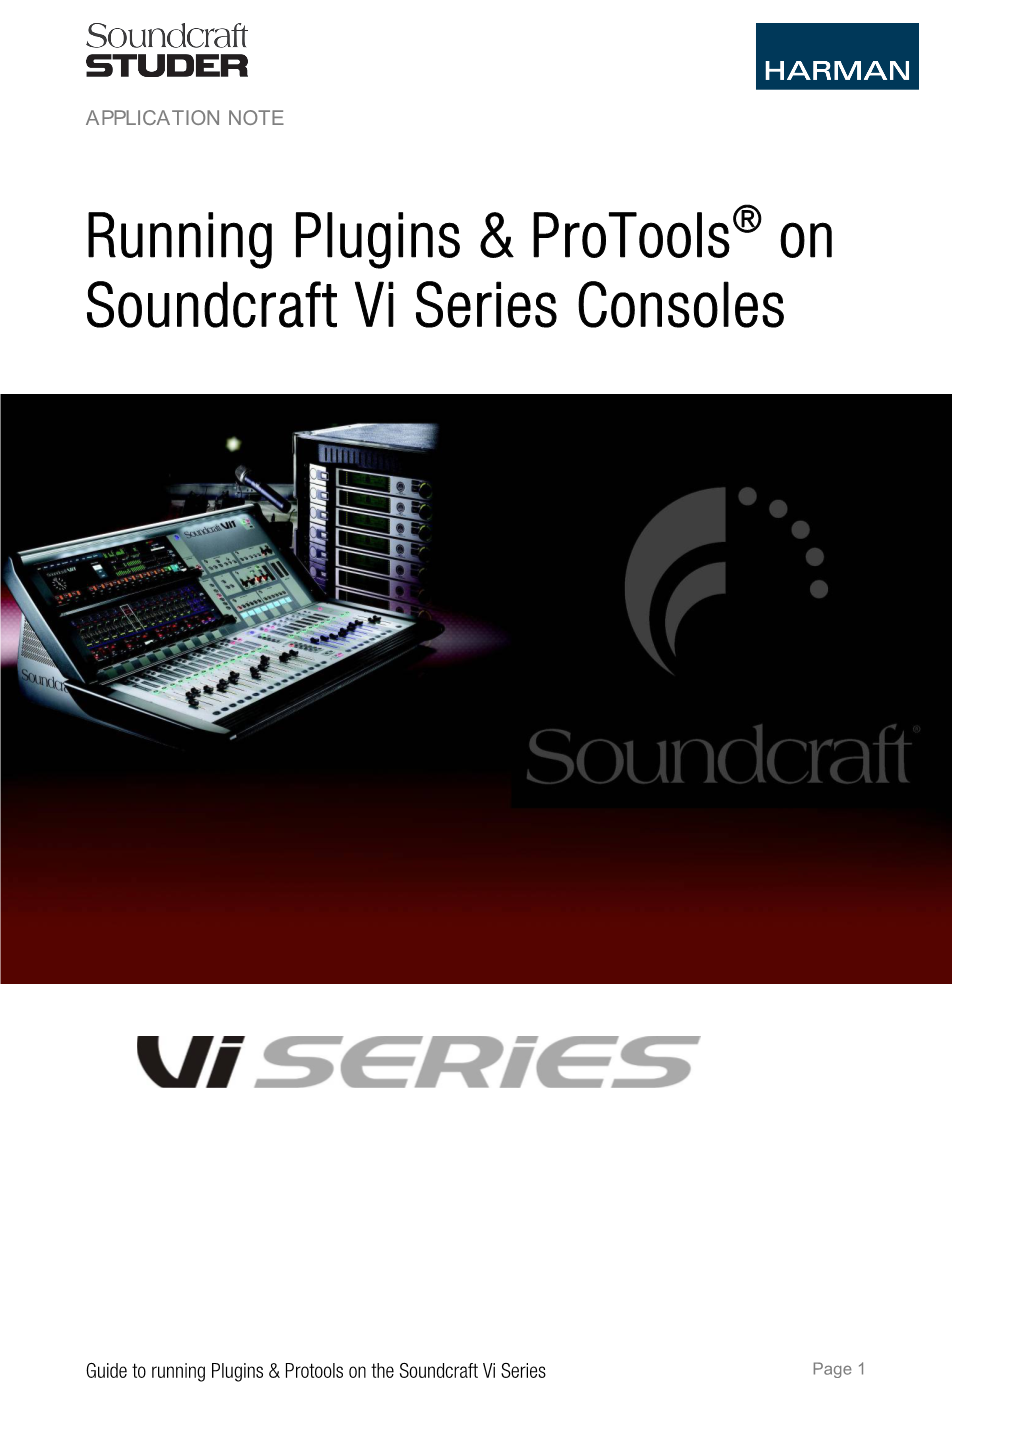 Running Plugins & Protools® on Soundcraft Vi Series Consoles